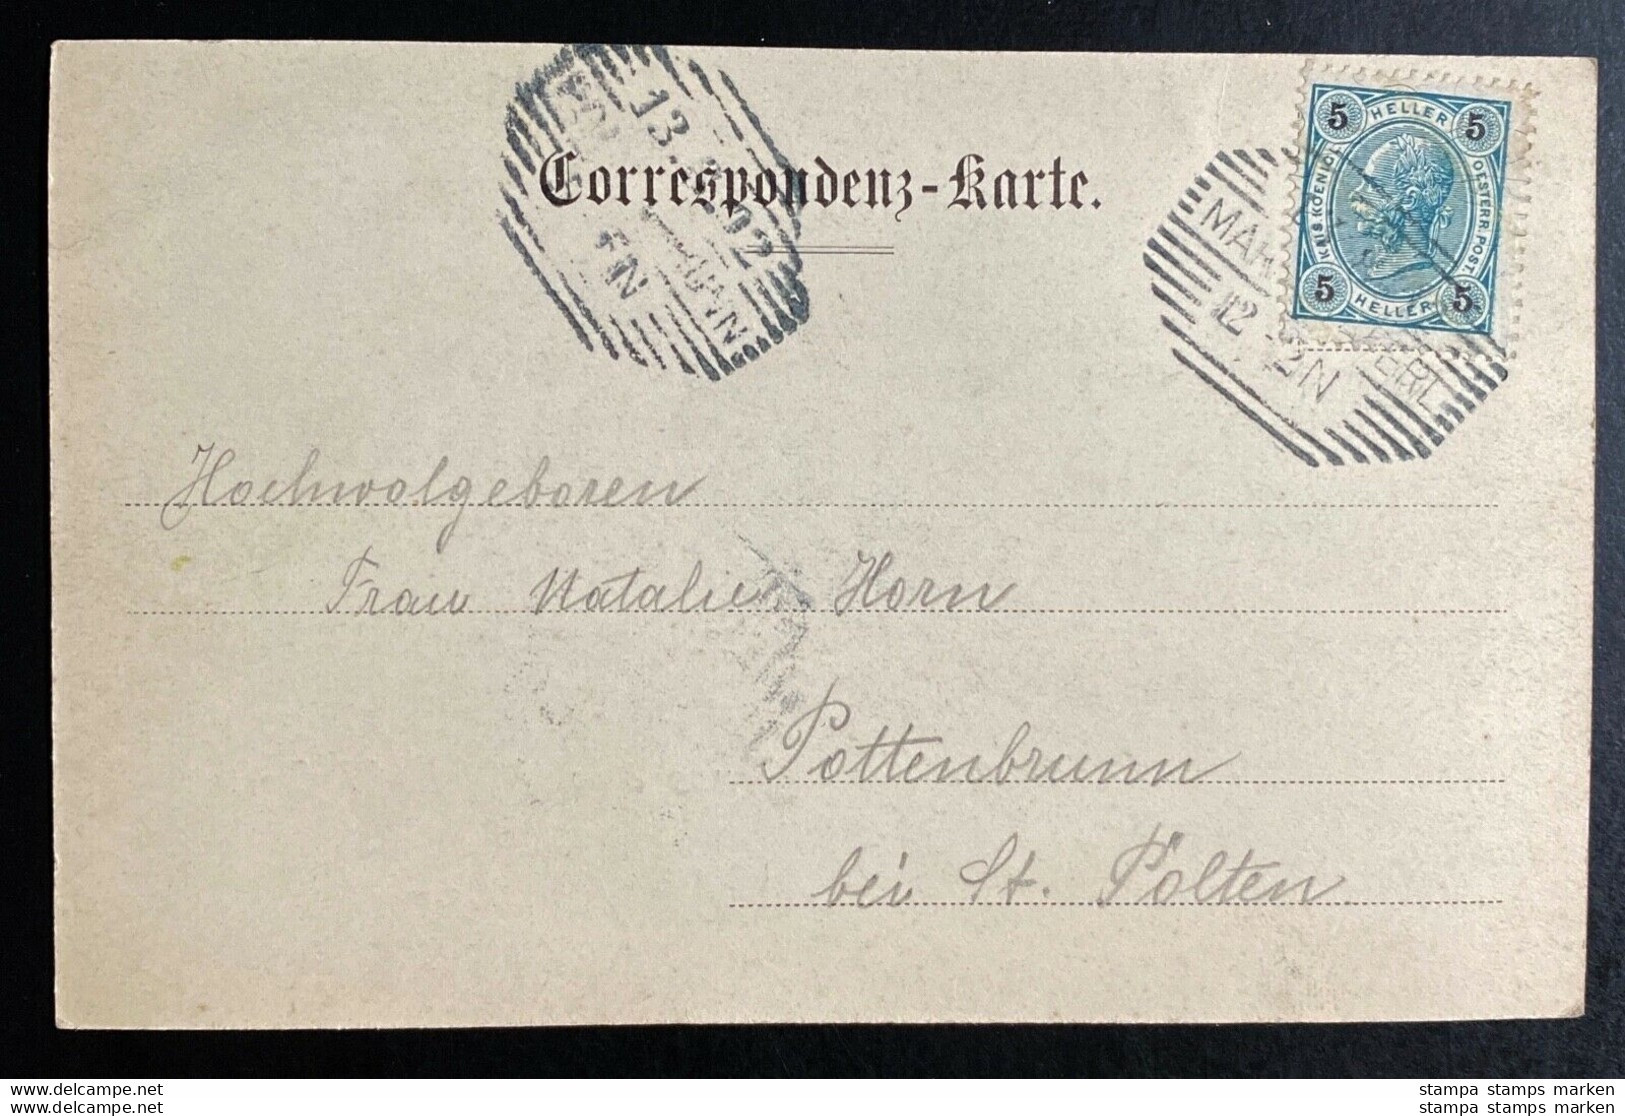 AK Litho Gruss Aus Maria Taferl Gestempelt Maria Taferl Und Ankunftsstempel Pottenbrunn 1902 - Maria Taferl